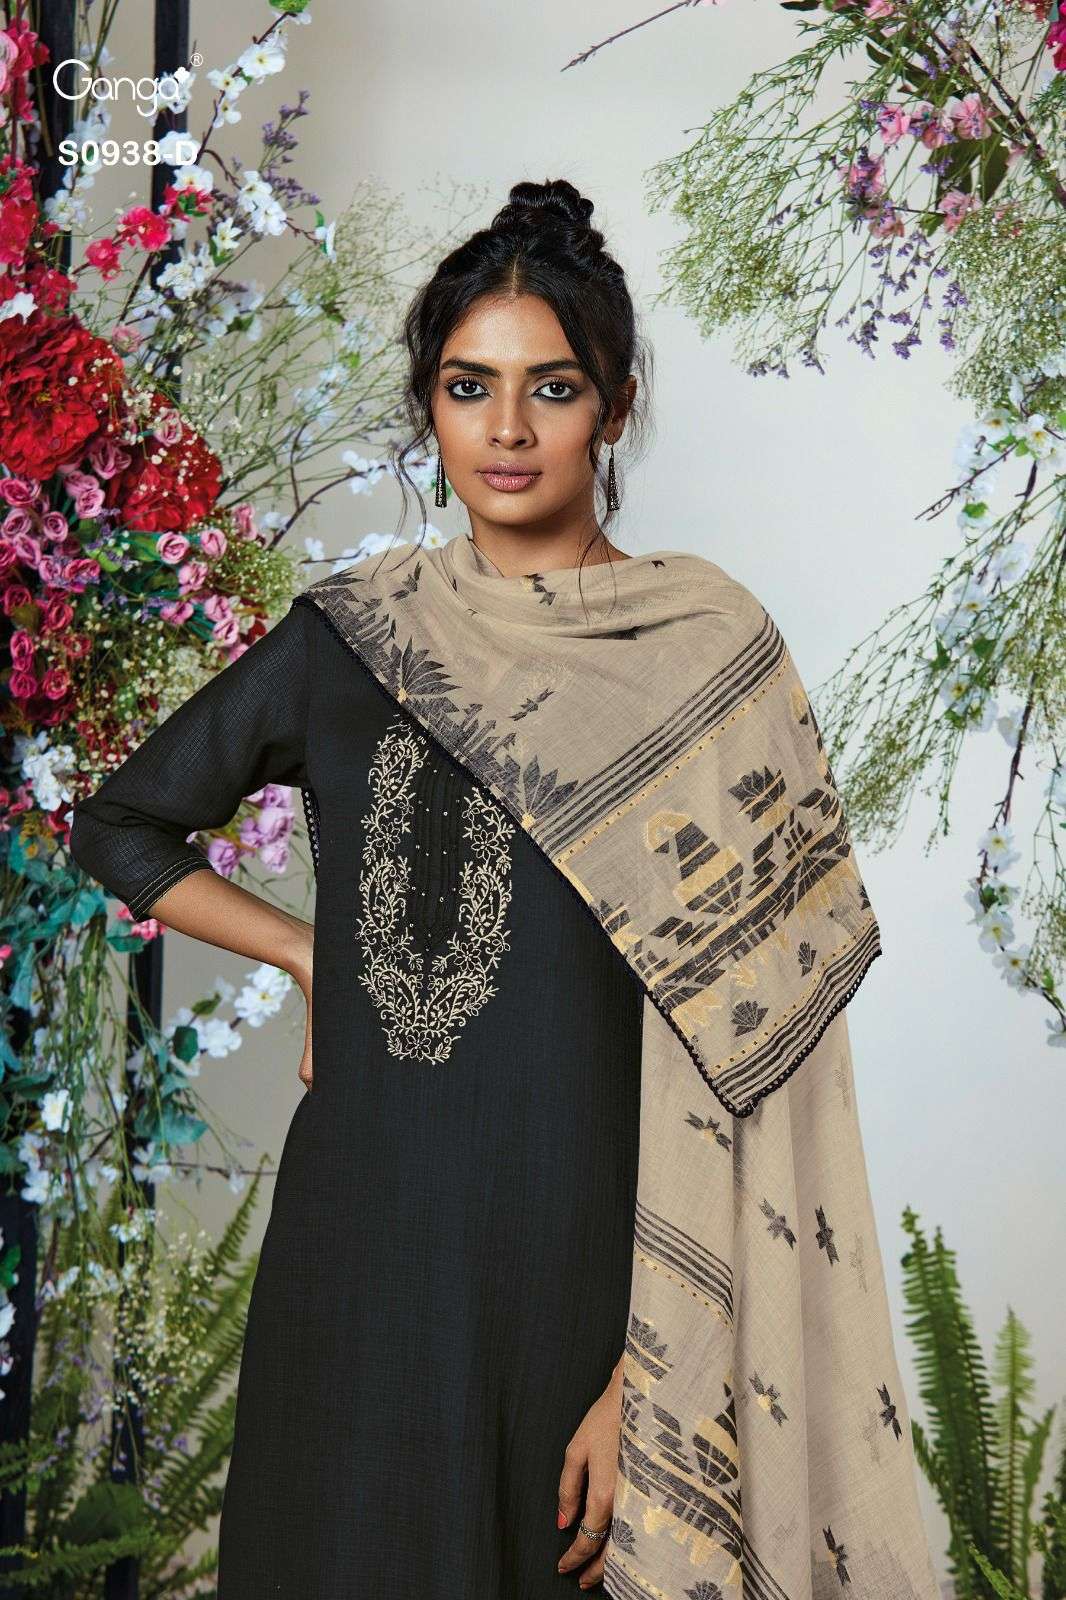 ganga ishana 938 series premium cotton with work designer salwar kameez surat 